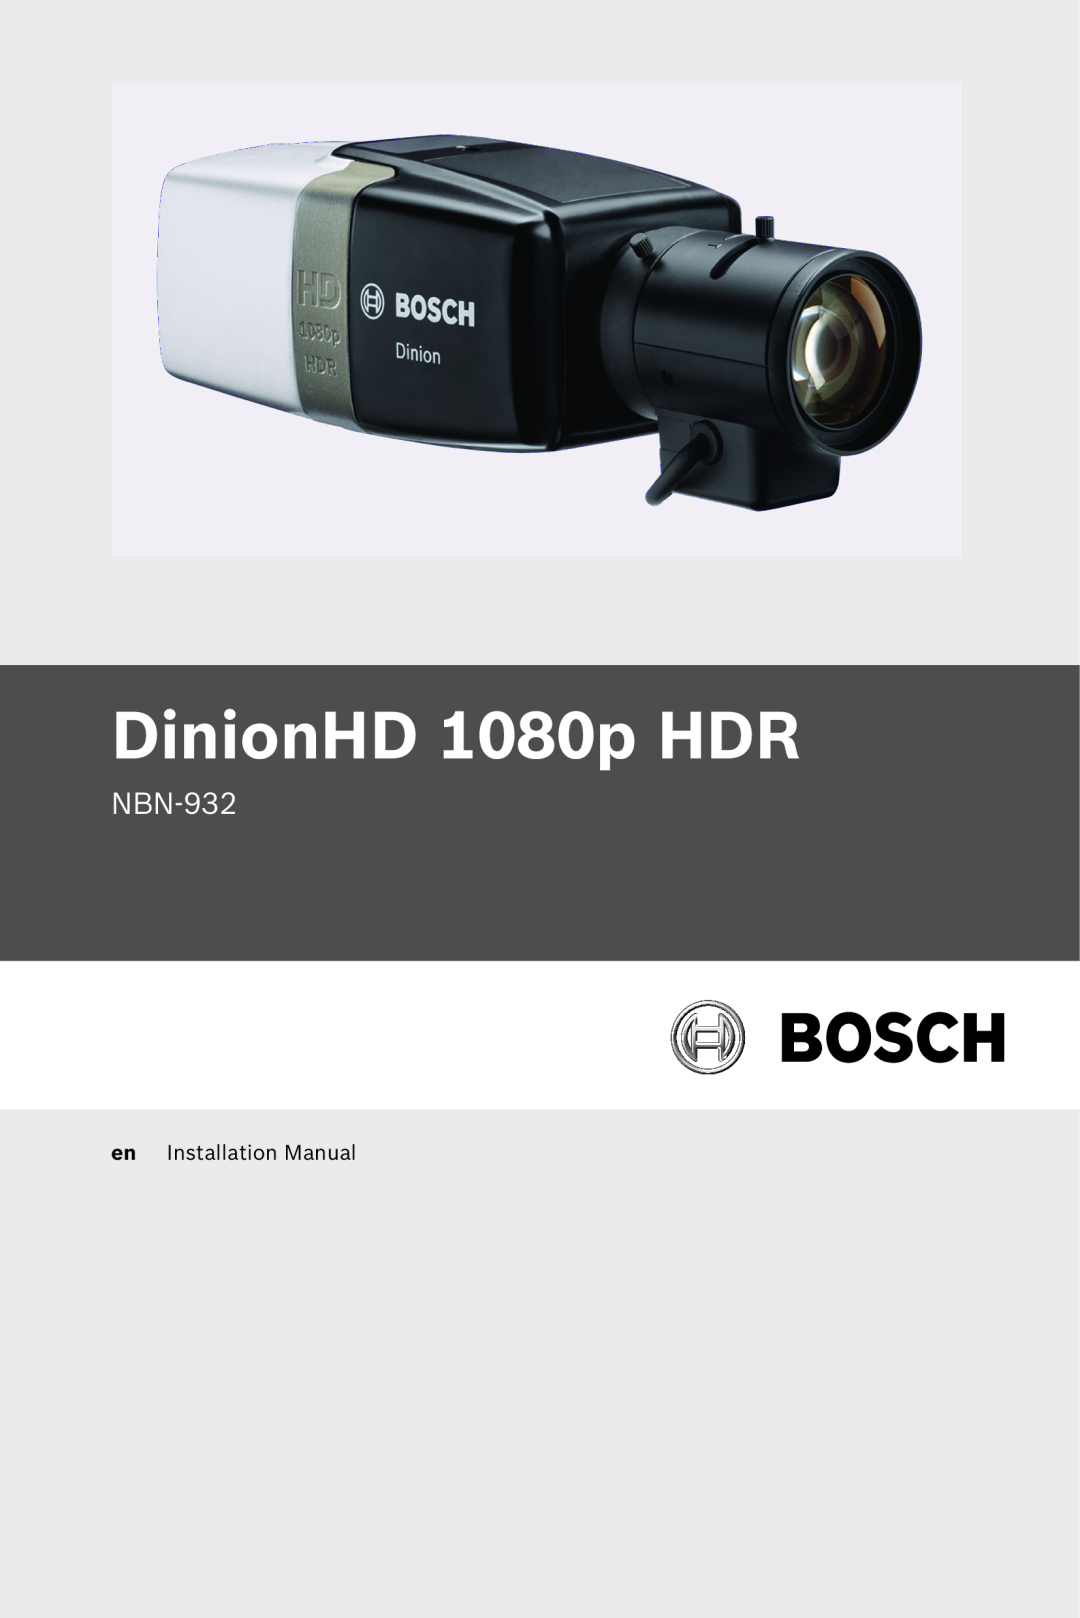 Bosch Appliances nbn-932 installation manual DinionHD 1080p HDR, NBN-932, en Installation Manual 